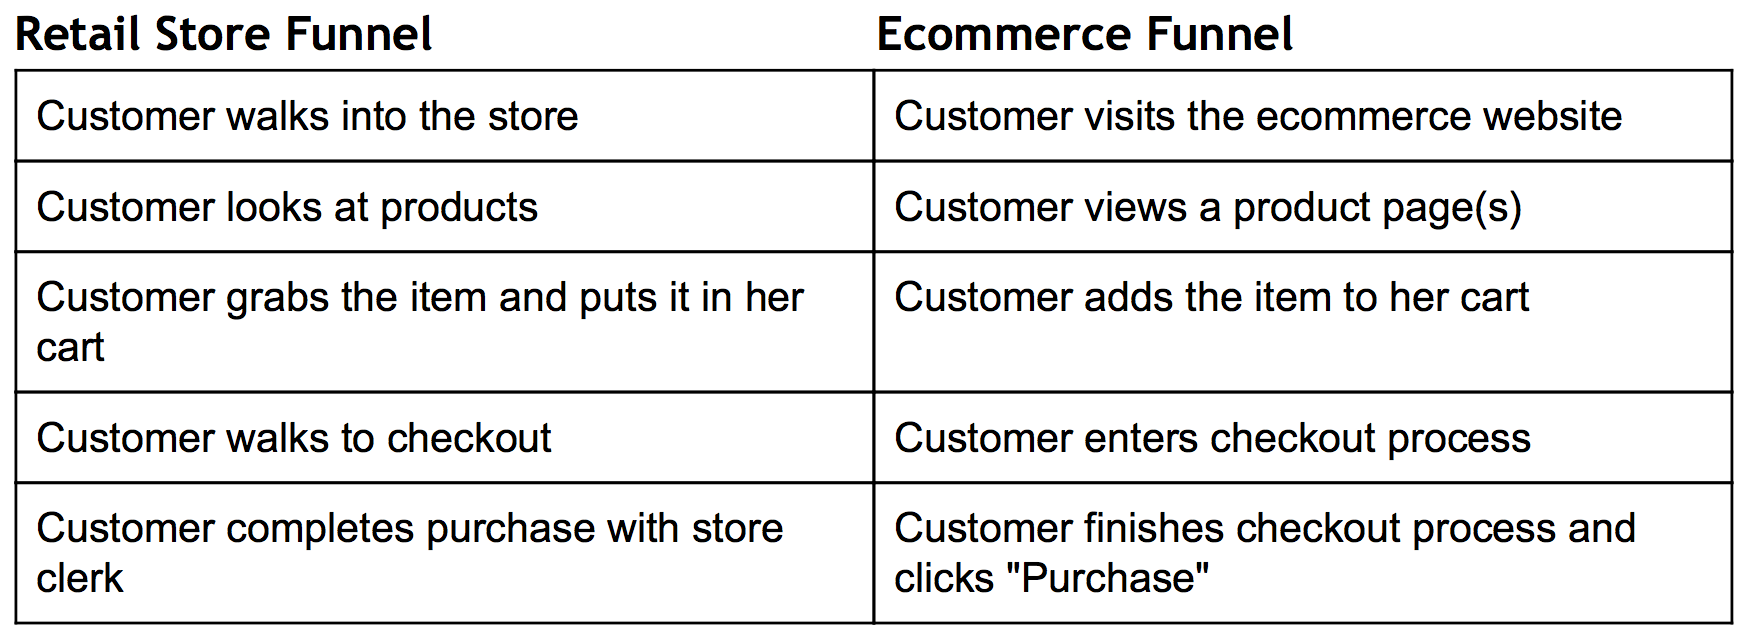 funnel-report-comparison-retail-store-ecommerce